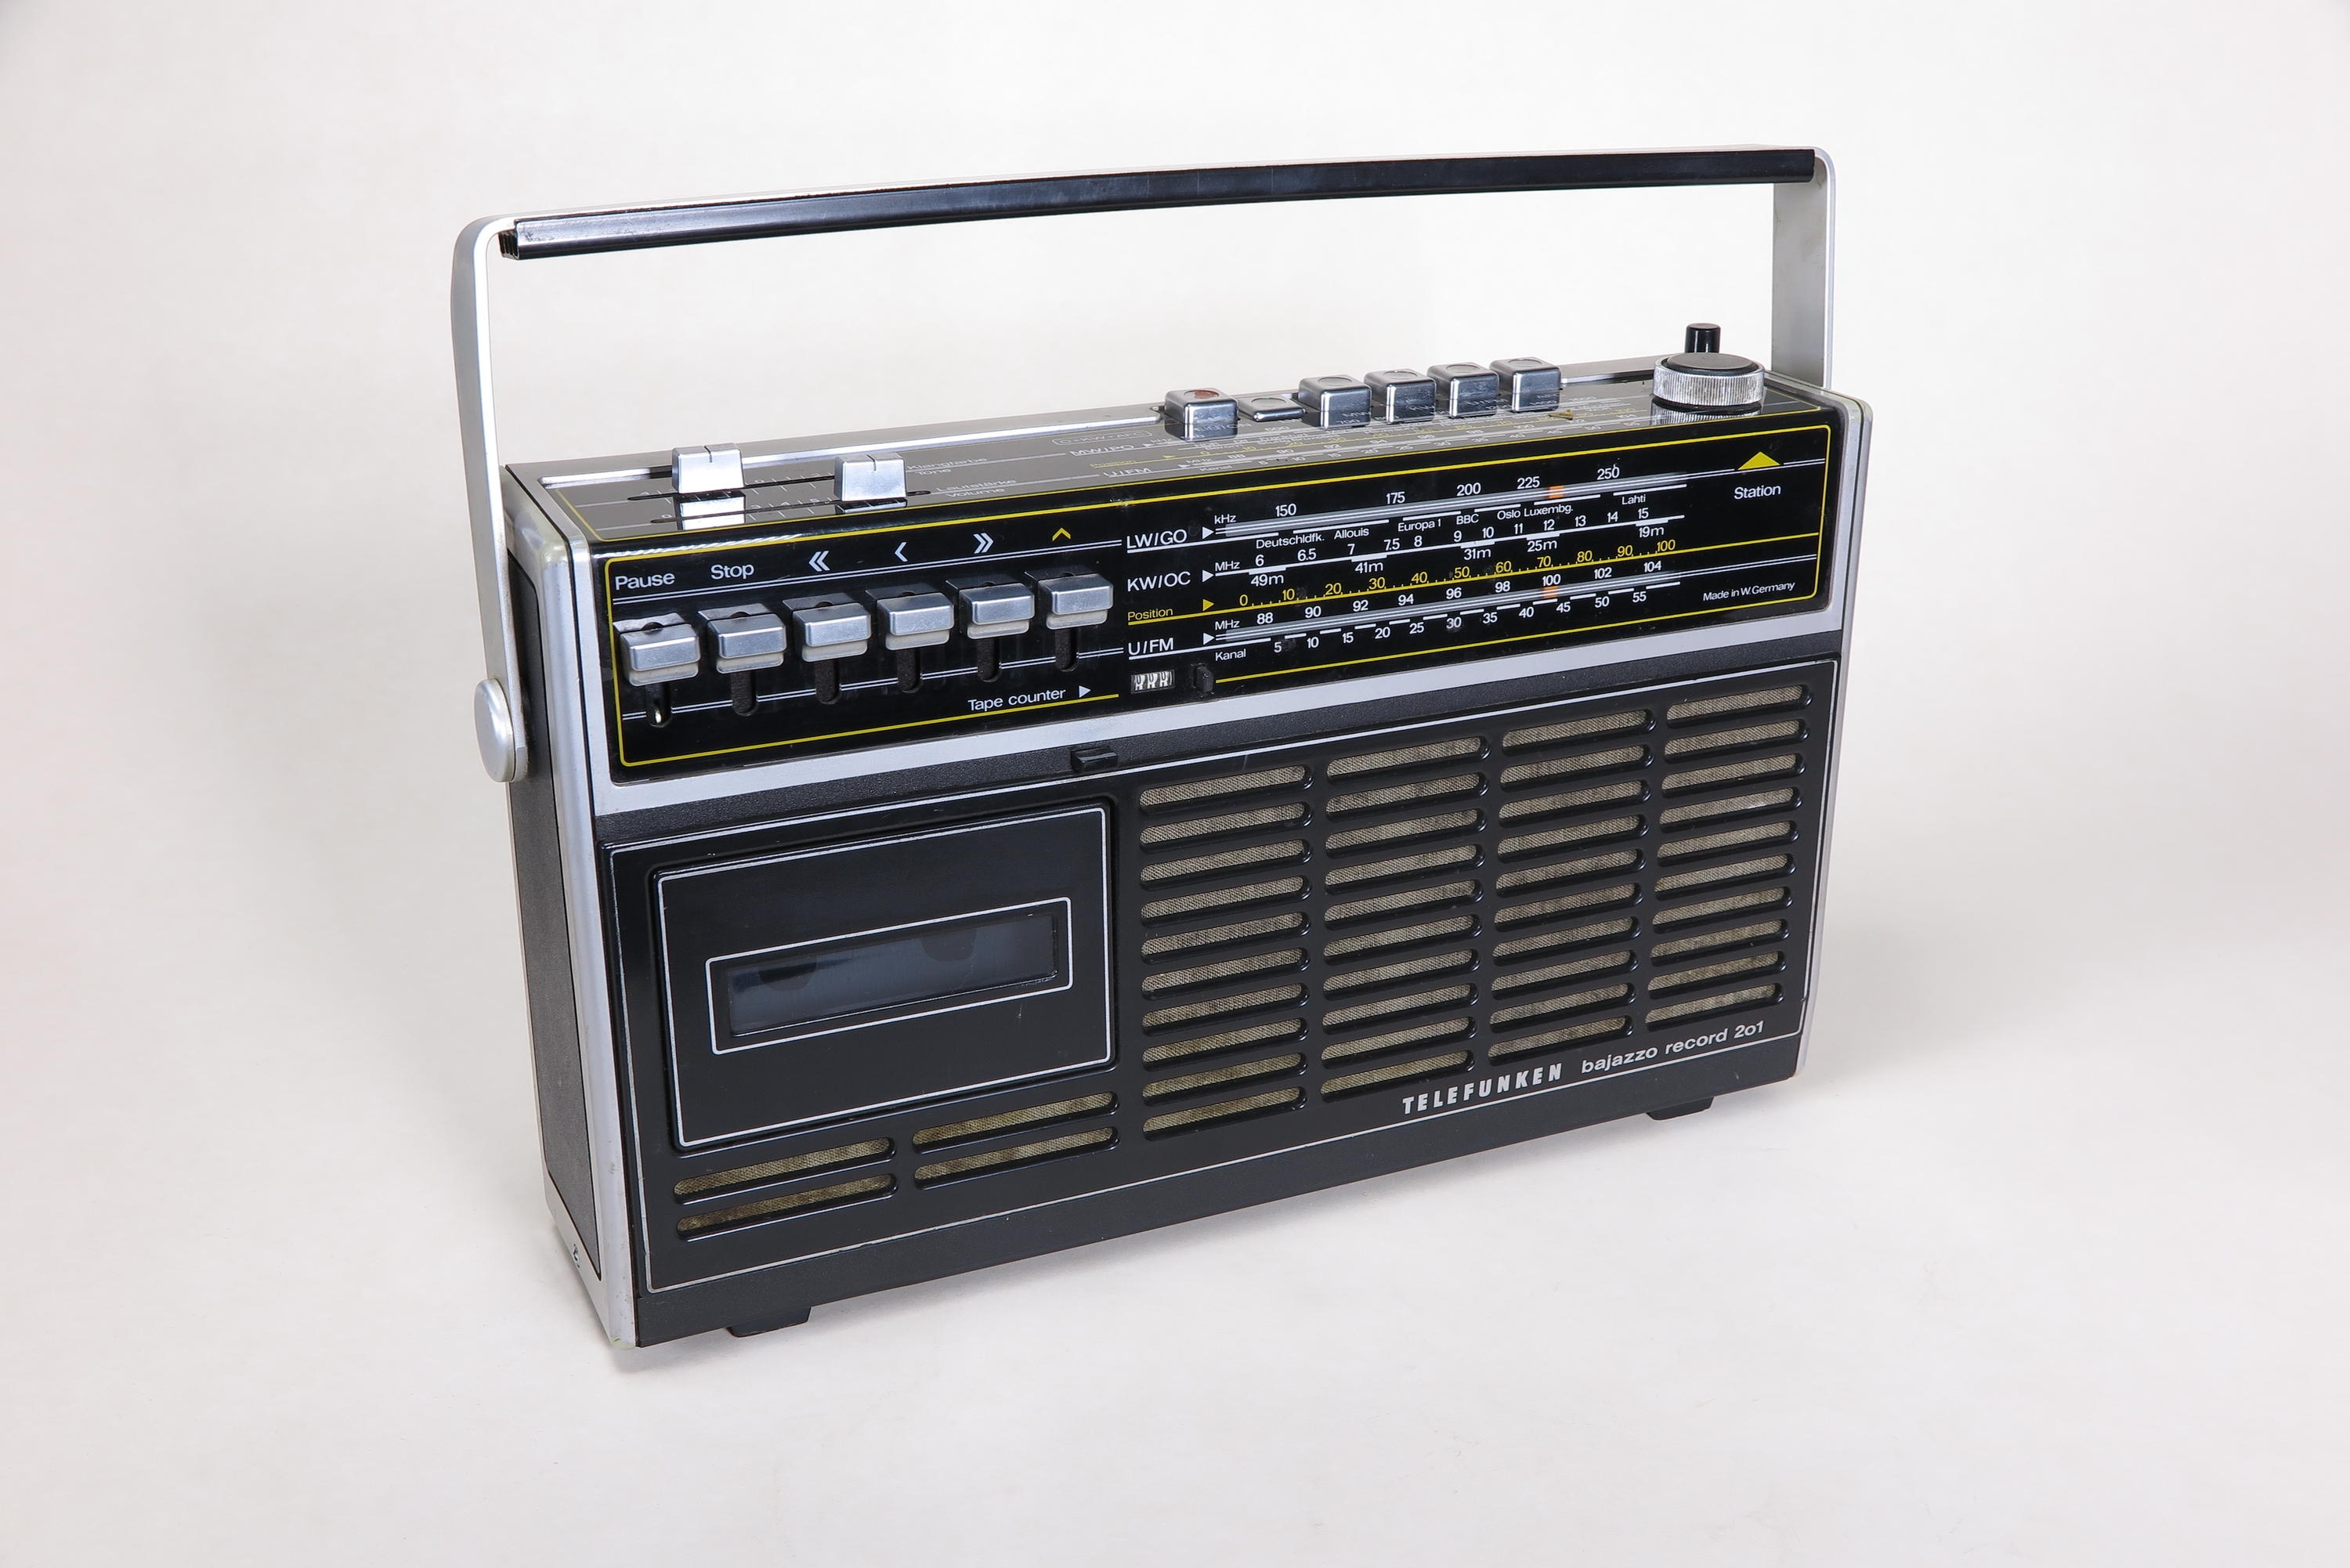 Radiorekorder Telefunken Bajazzo Record 201 (Deutsches Technikmuseum CC BY)